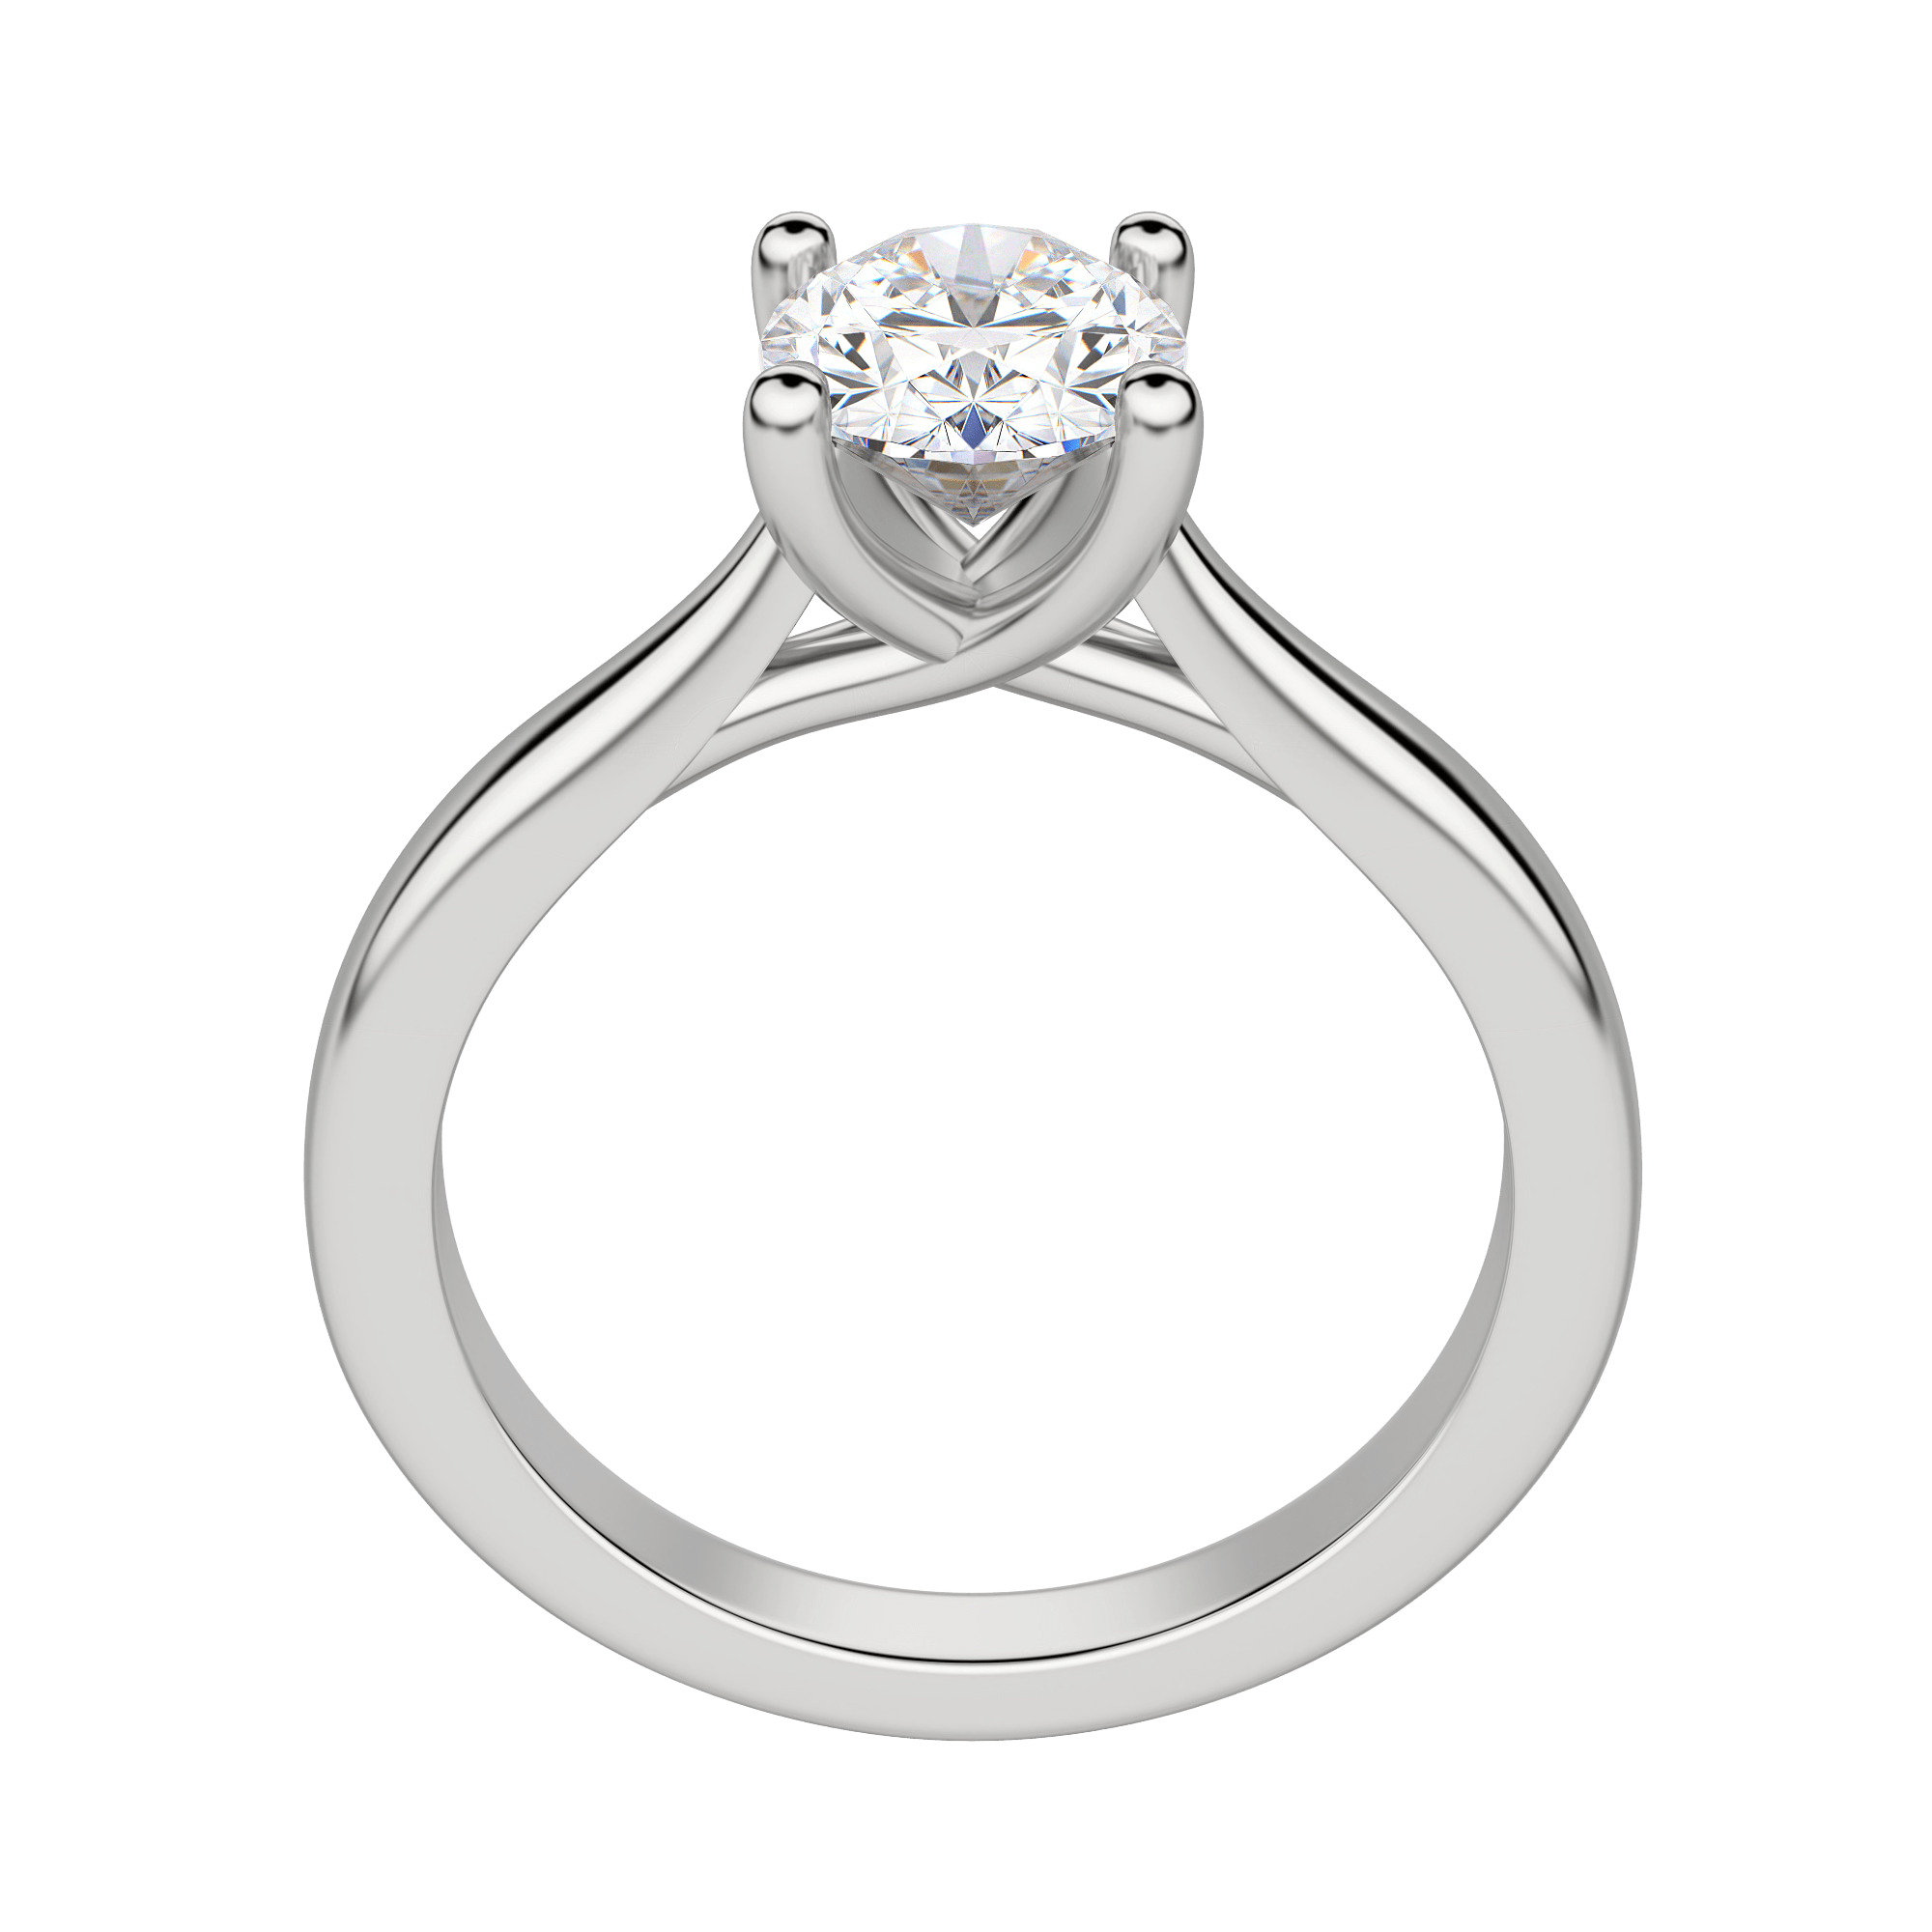 Harp Oval Cut Engagement Ring, Platinum, 18K White Gold, Hover, 